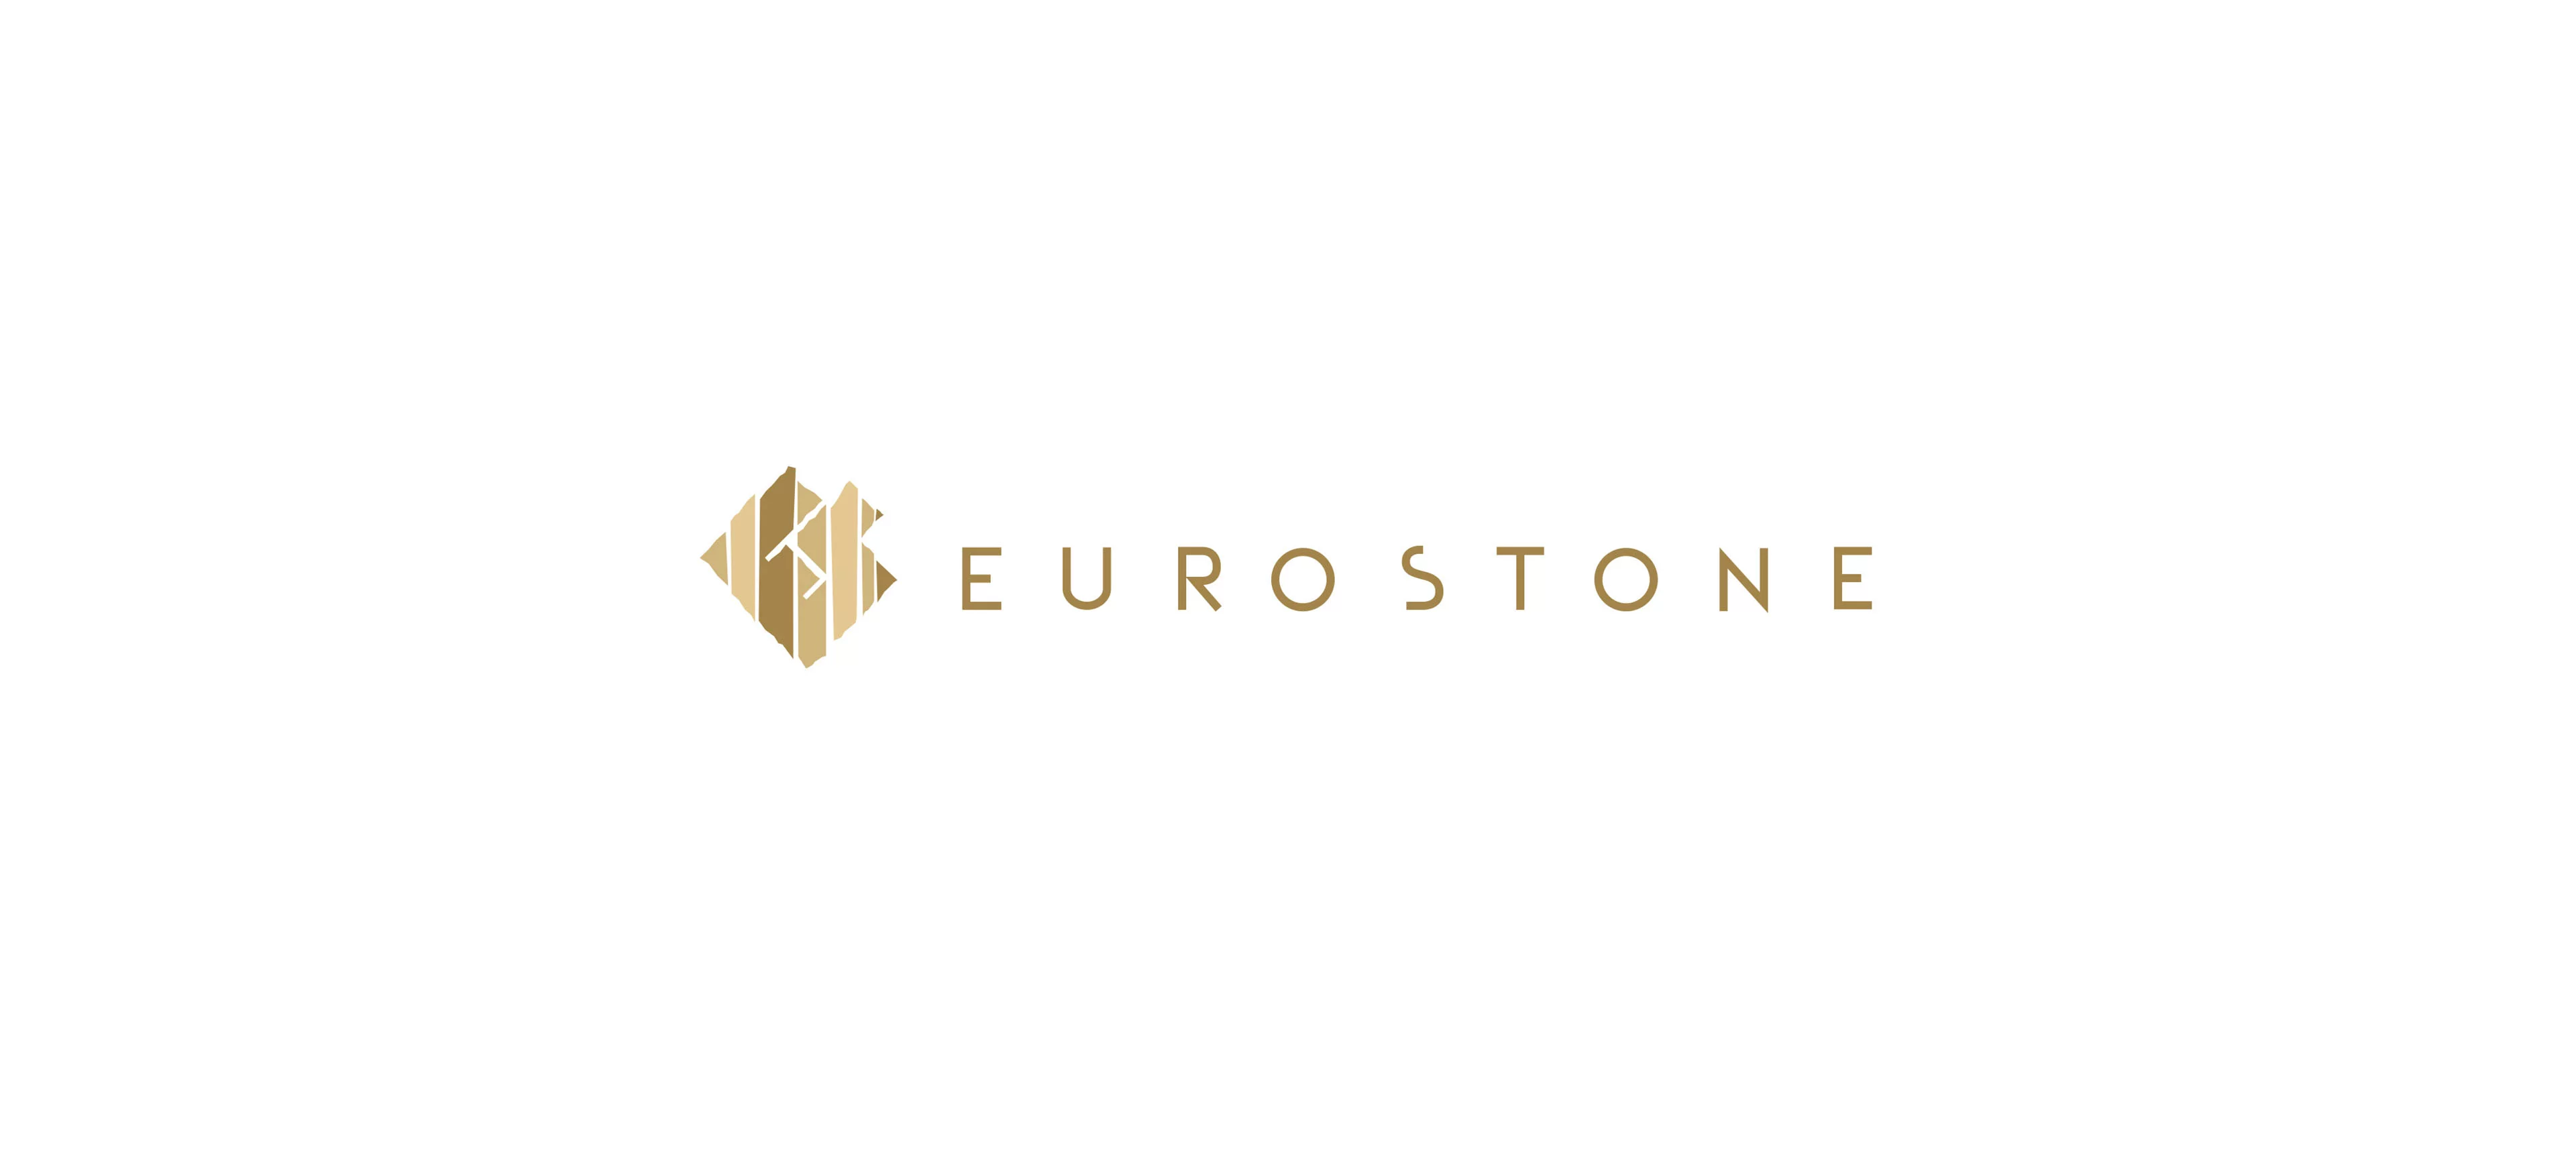 Logo Eurostone wersja pozioma Realizacja Sto15 Studio Projektant Piotr Ratuski